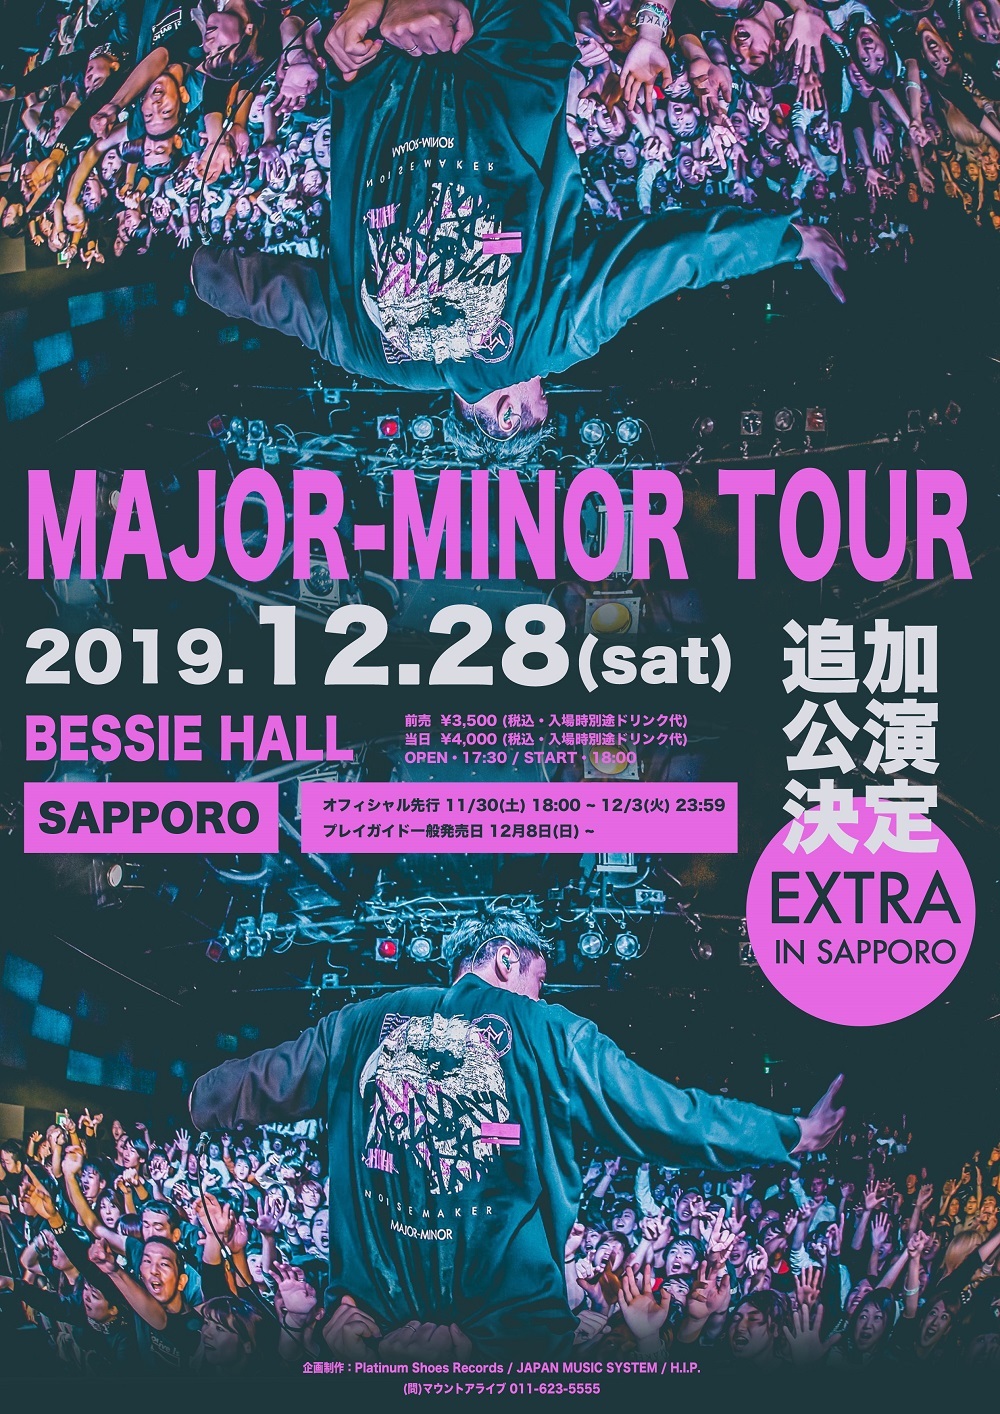 "MAJOR-MINOR TOUR EXTRA" IN SAPPORO